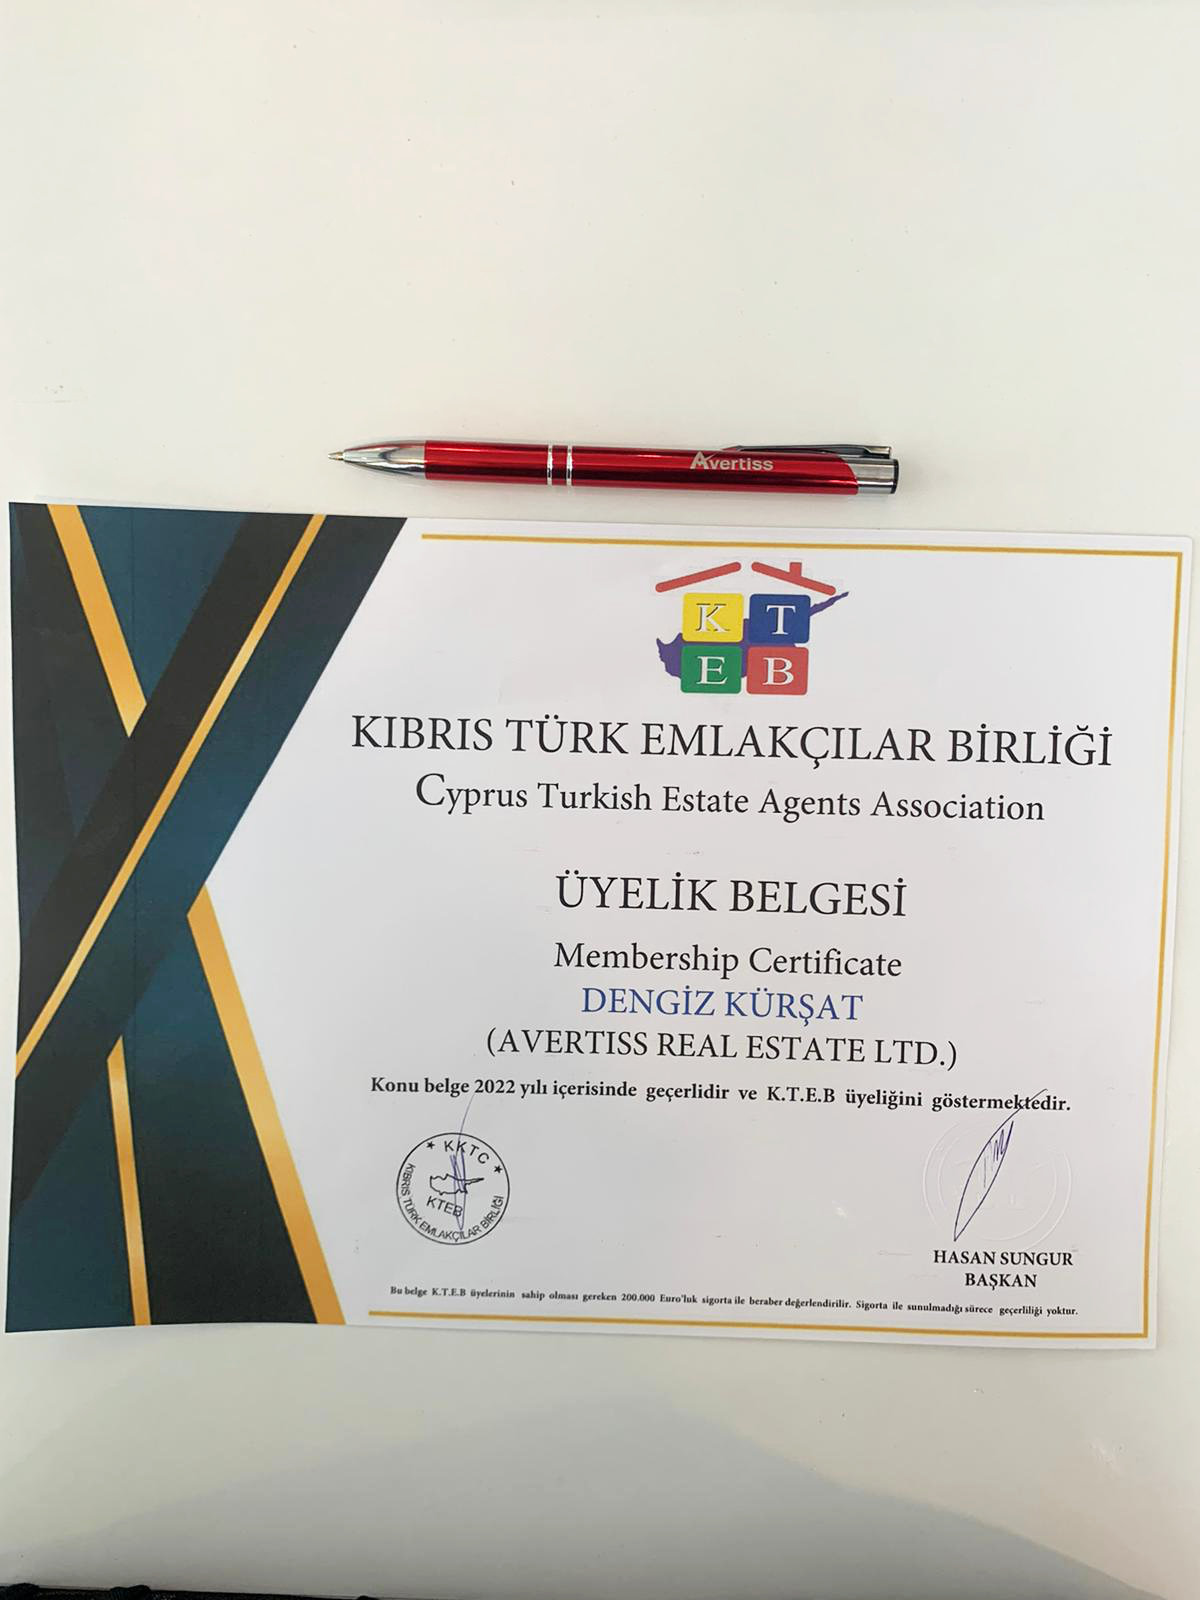 Cyprus Turkish Realtors Association